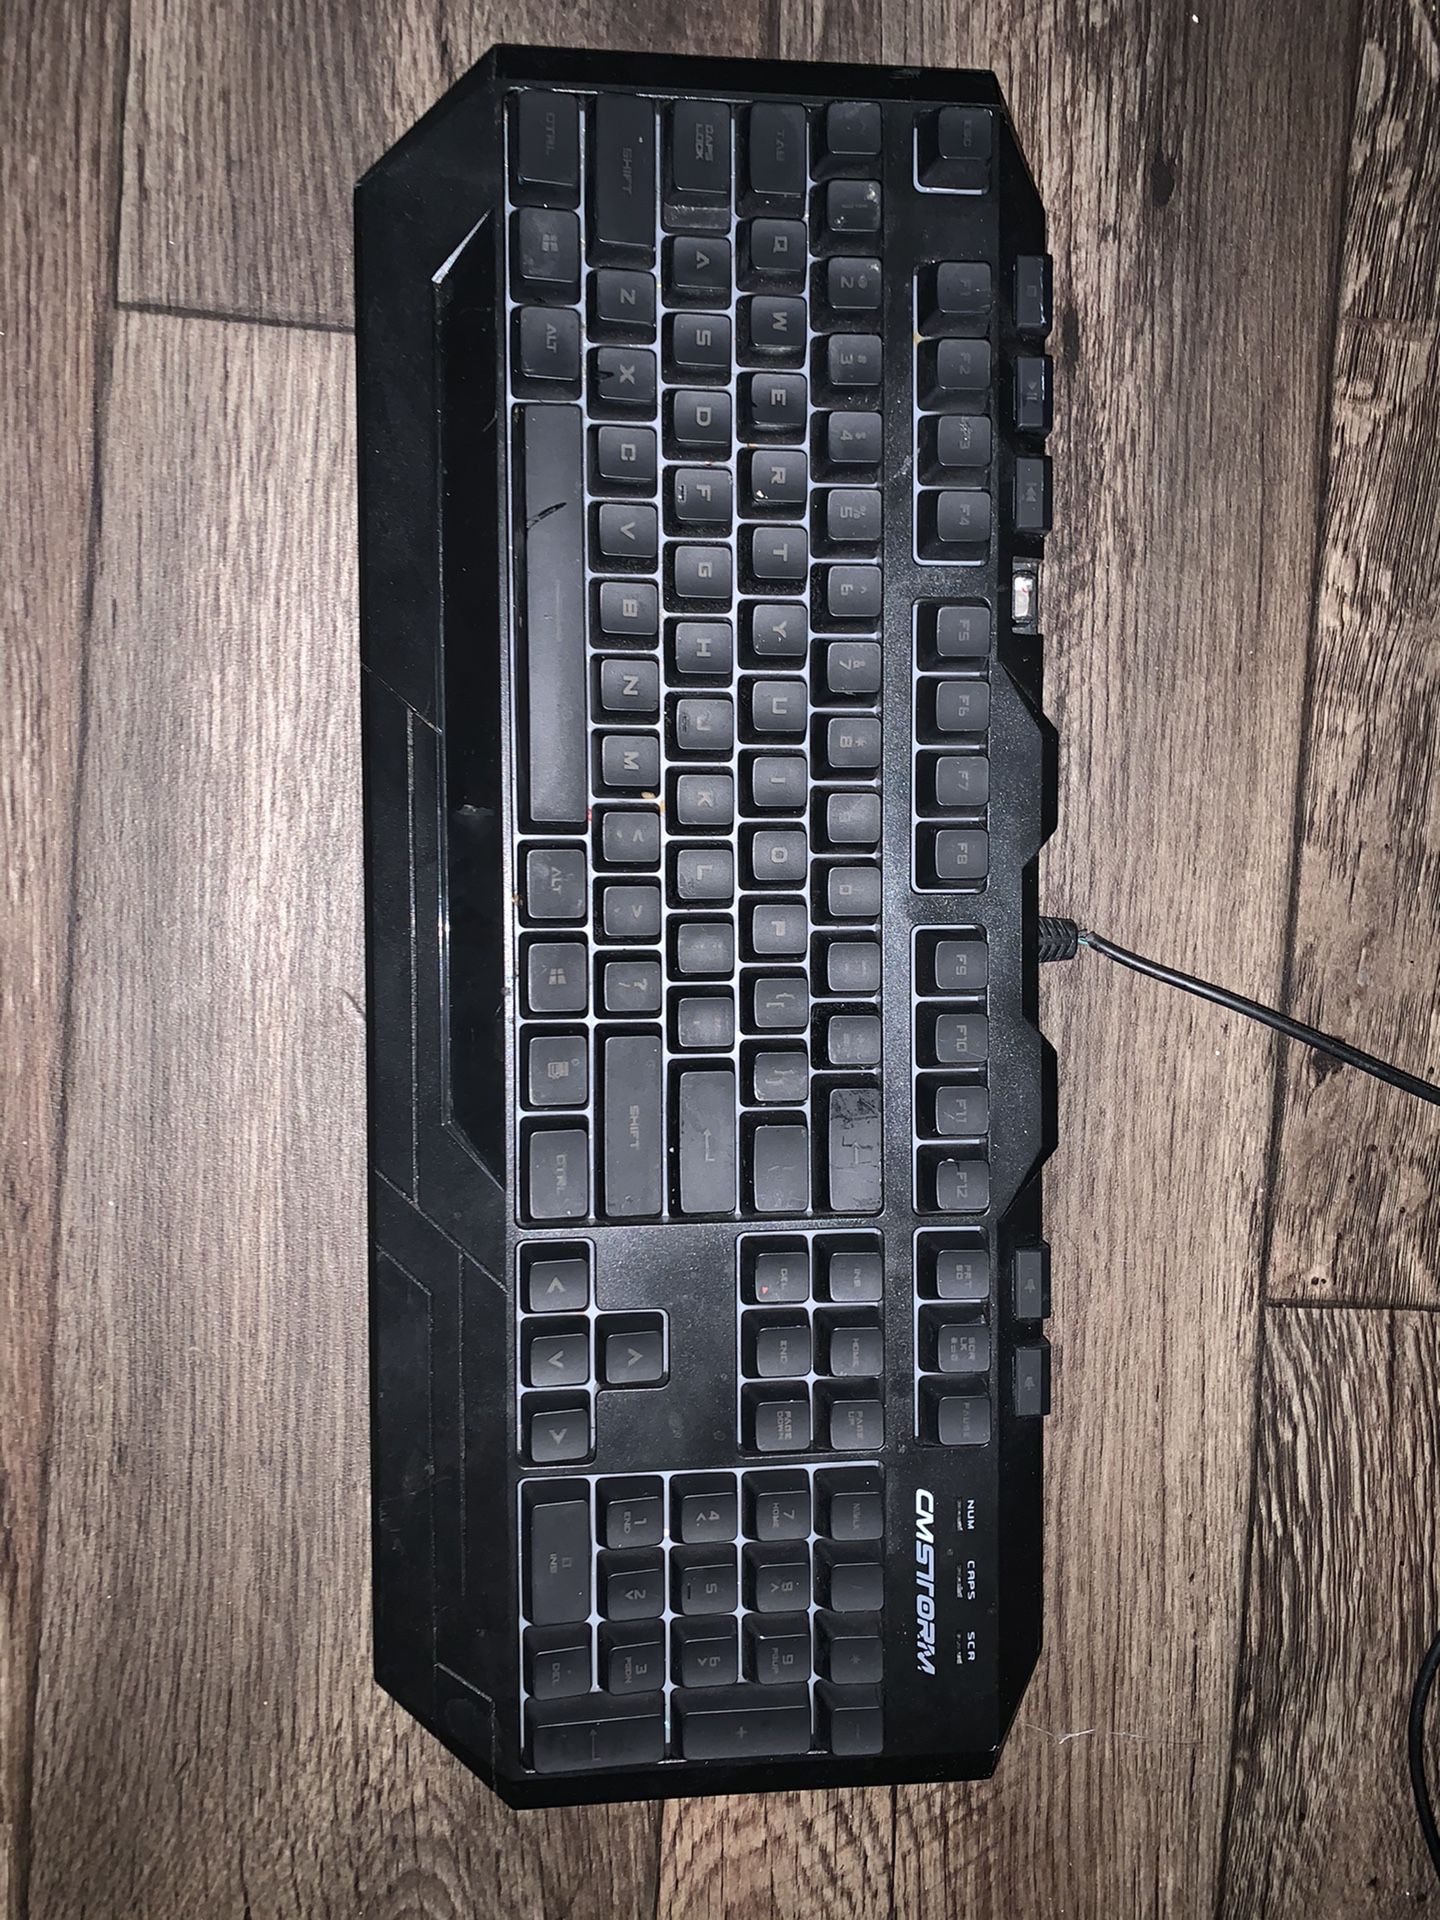 Computer Gaming Keyboard